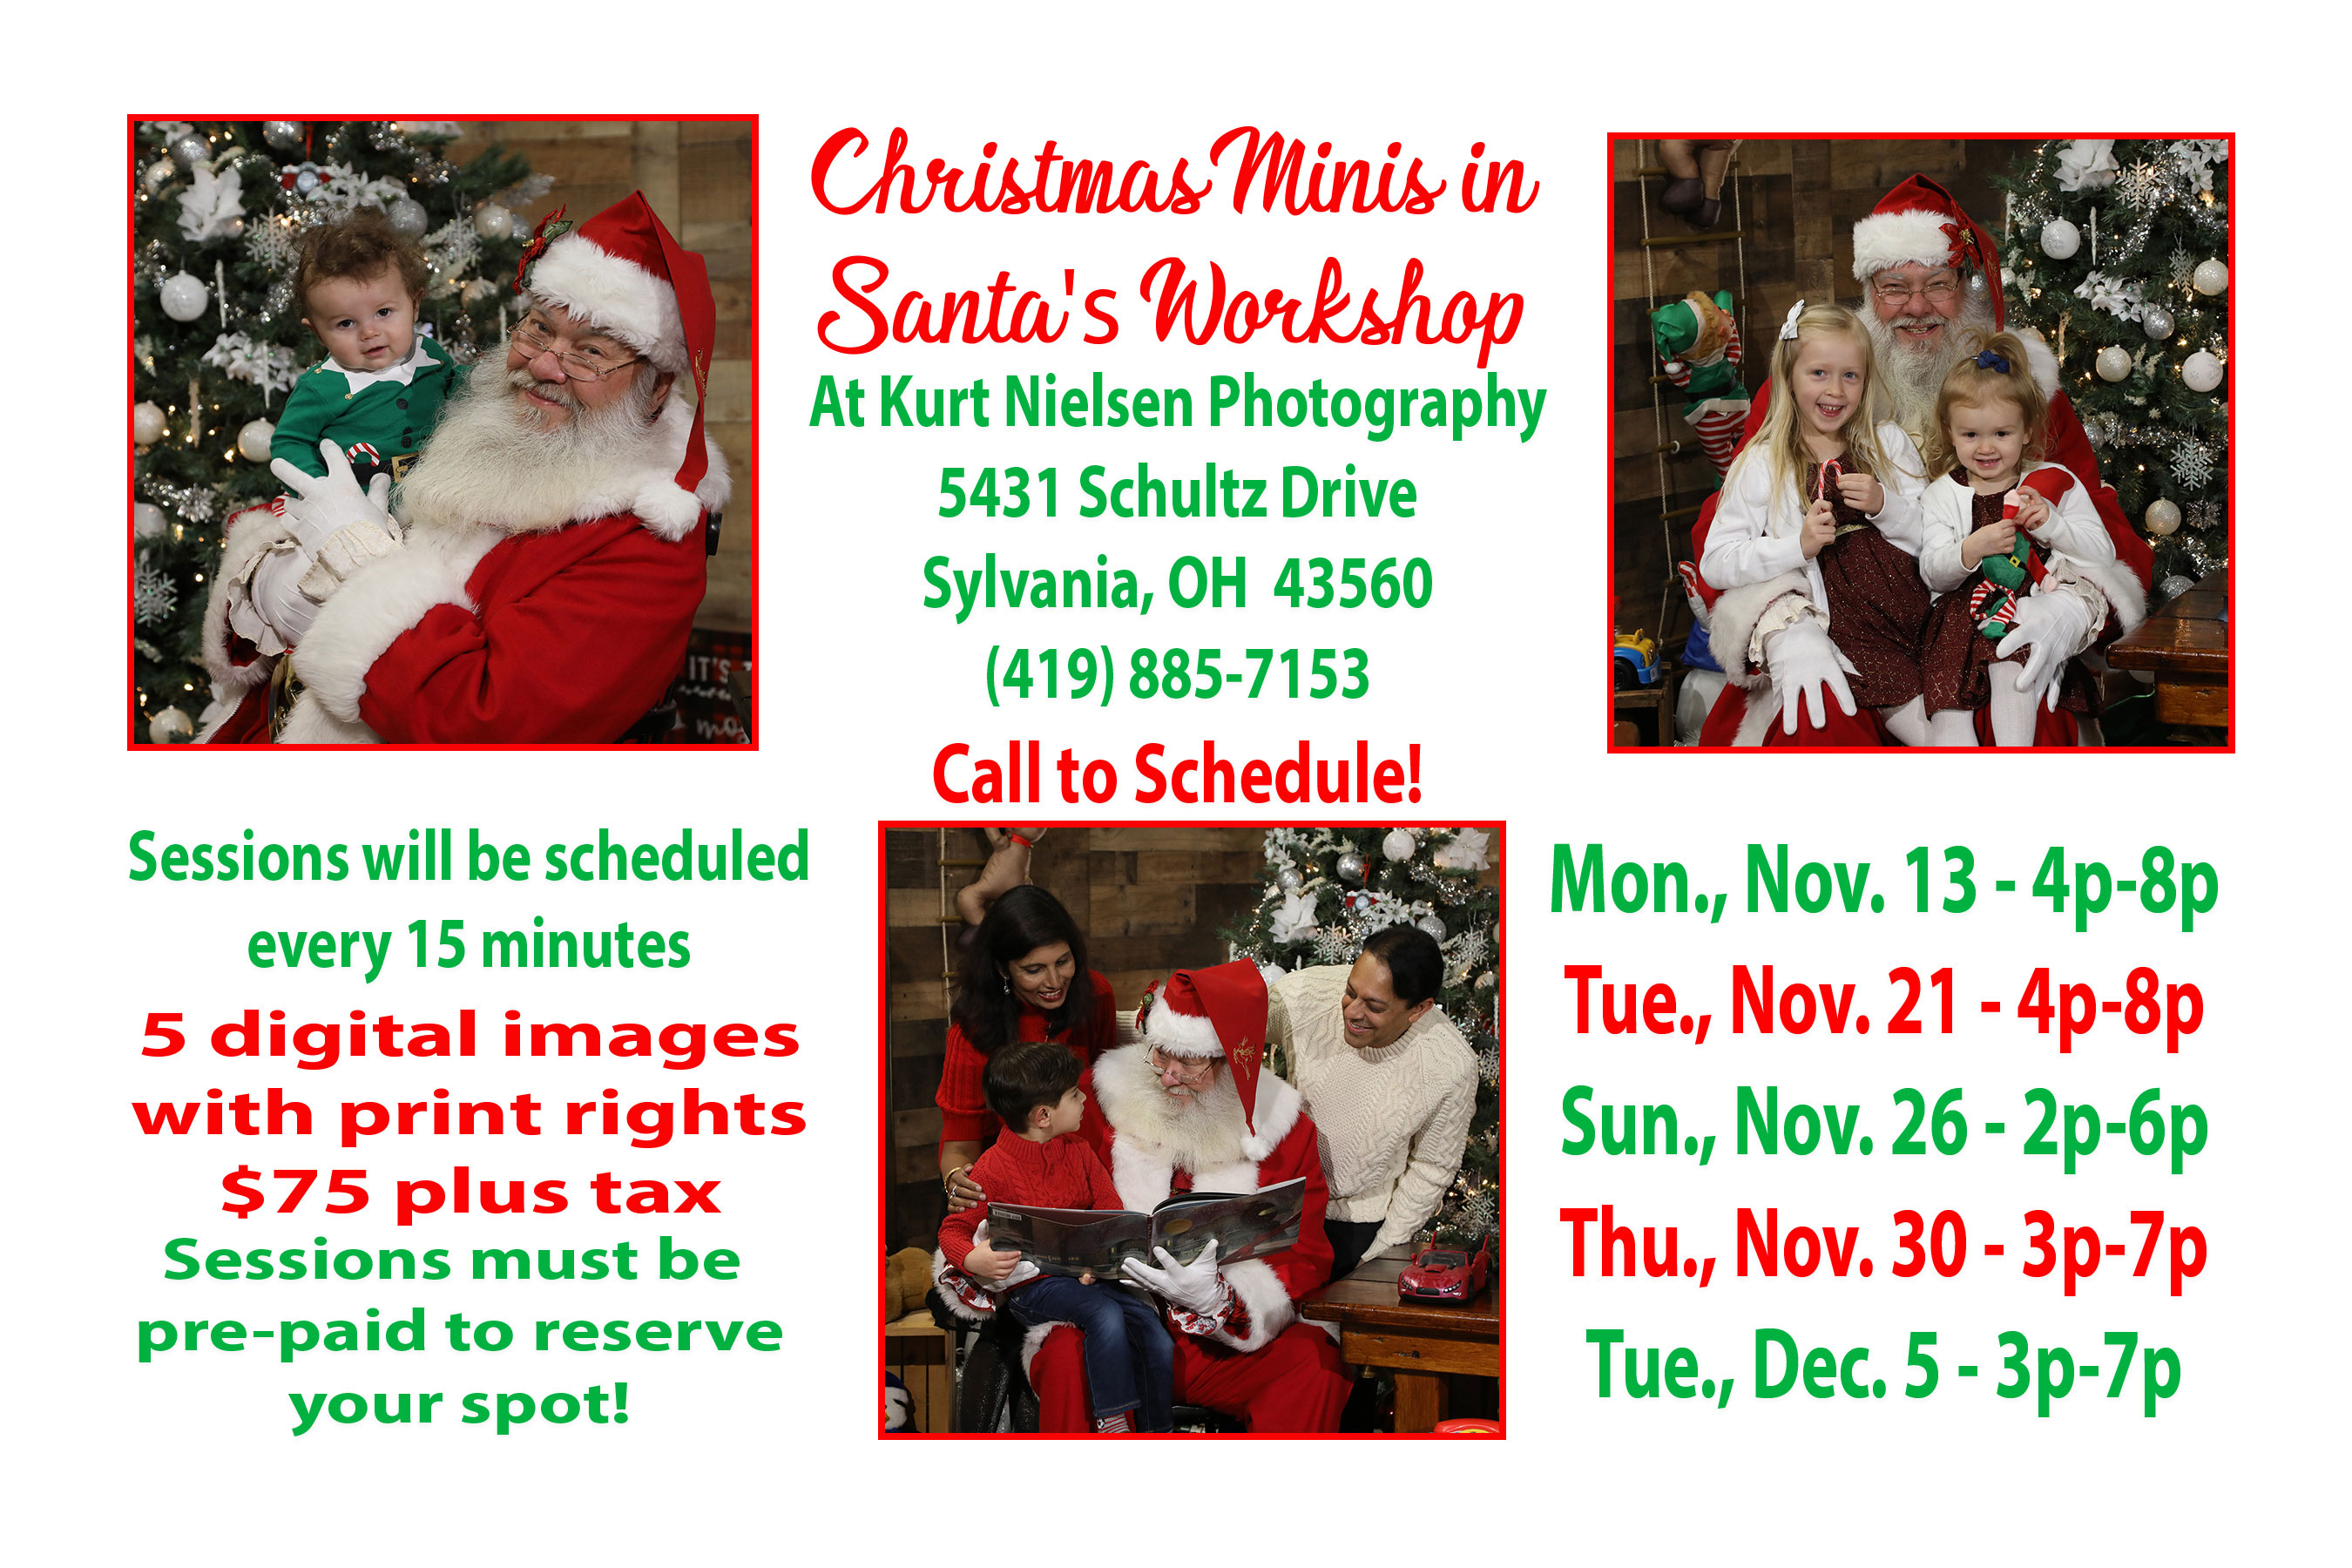 Santa's workshop Christmas Mini Photo Sessions in Toledo Ohio